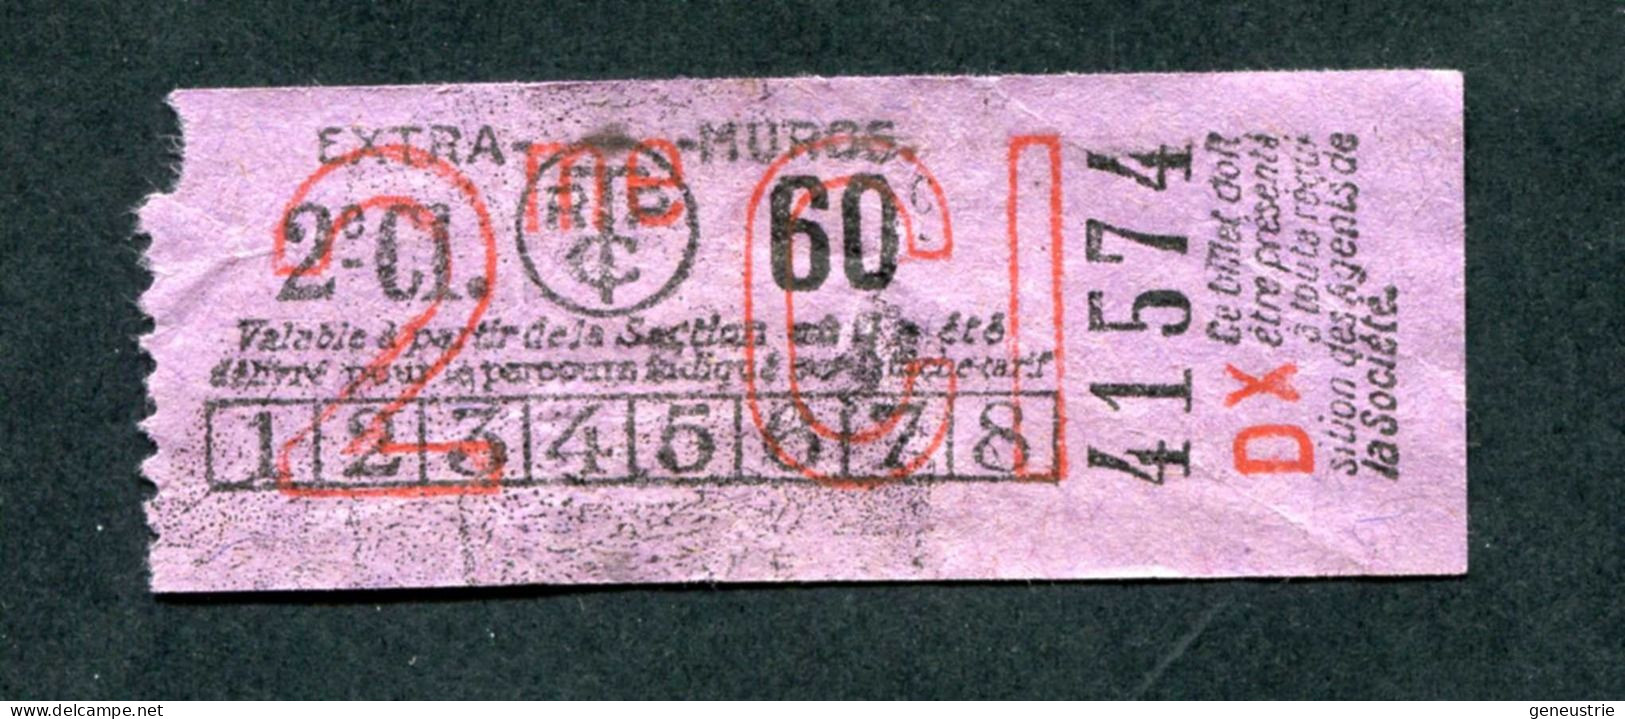 Ticket De Tramways Parisiens 1921 à 1938 (STCRP) Extra-muros 2e Classe 60c - Paris" Tramway - Tram - Europe